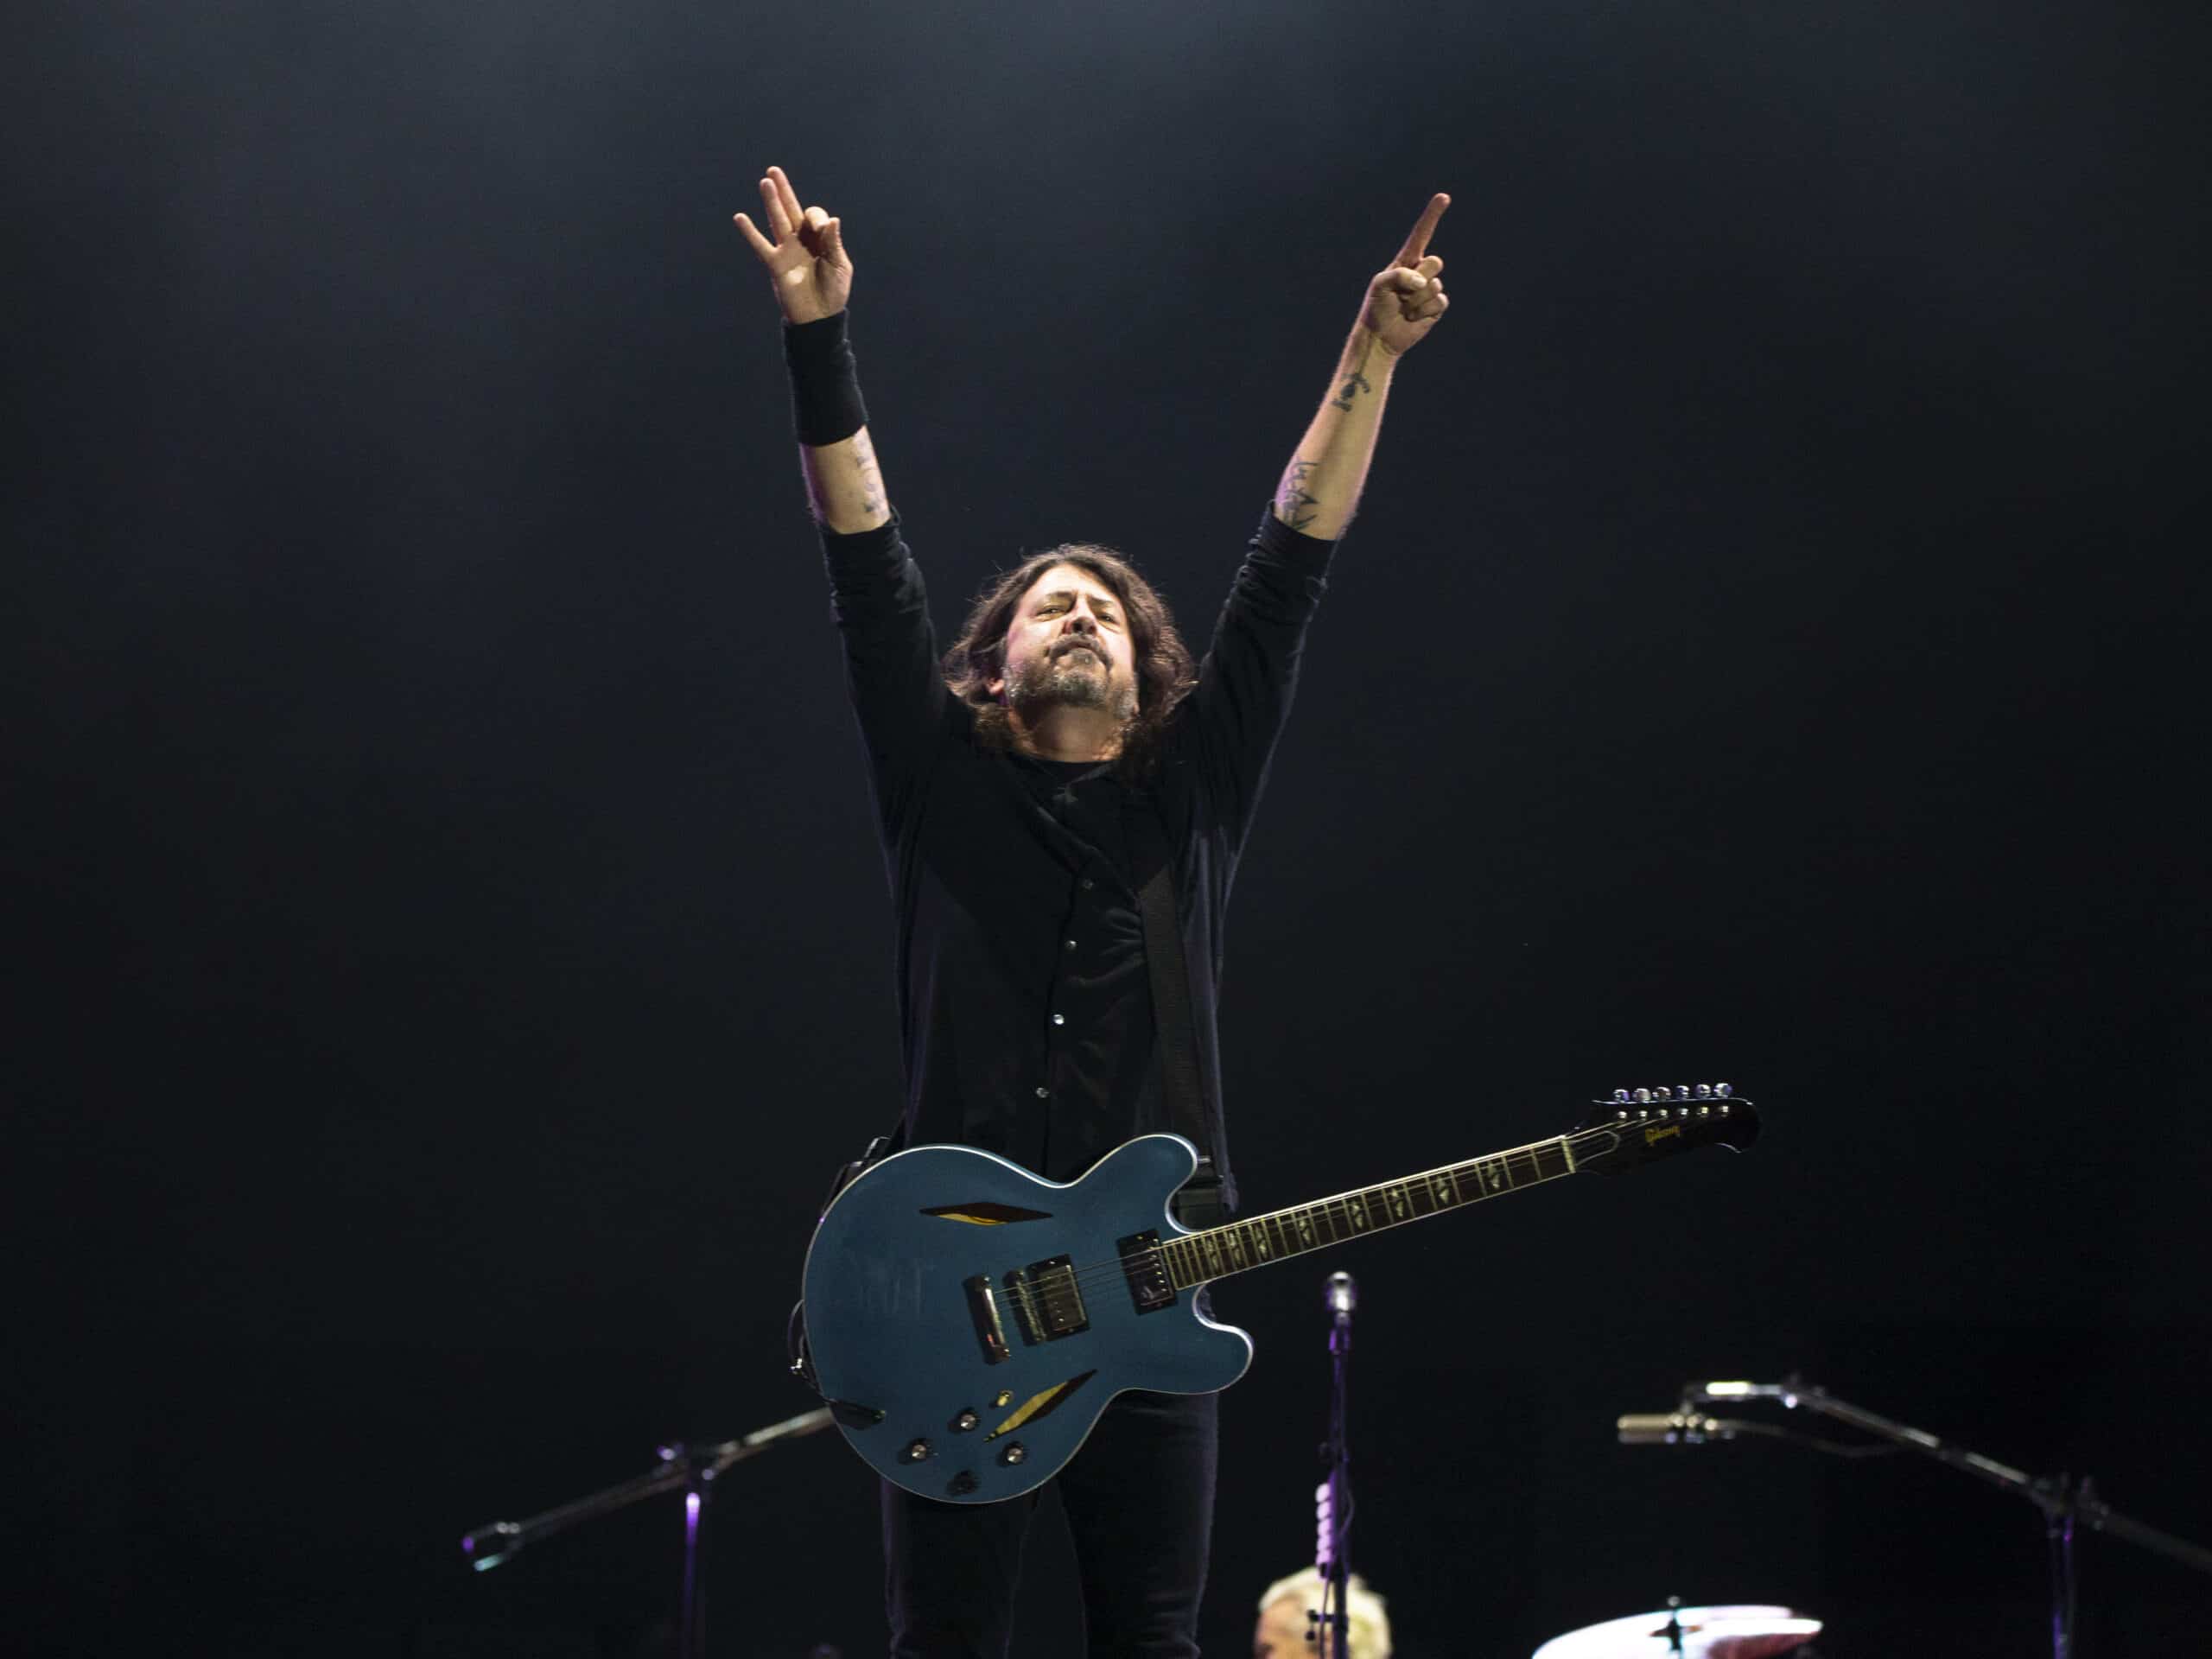 Sem Taylor Hawkins, Foo Fighters retorna ao Brasil no festival The Town;  veja a data do show